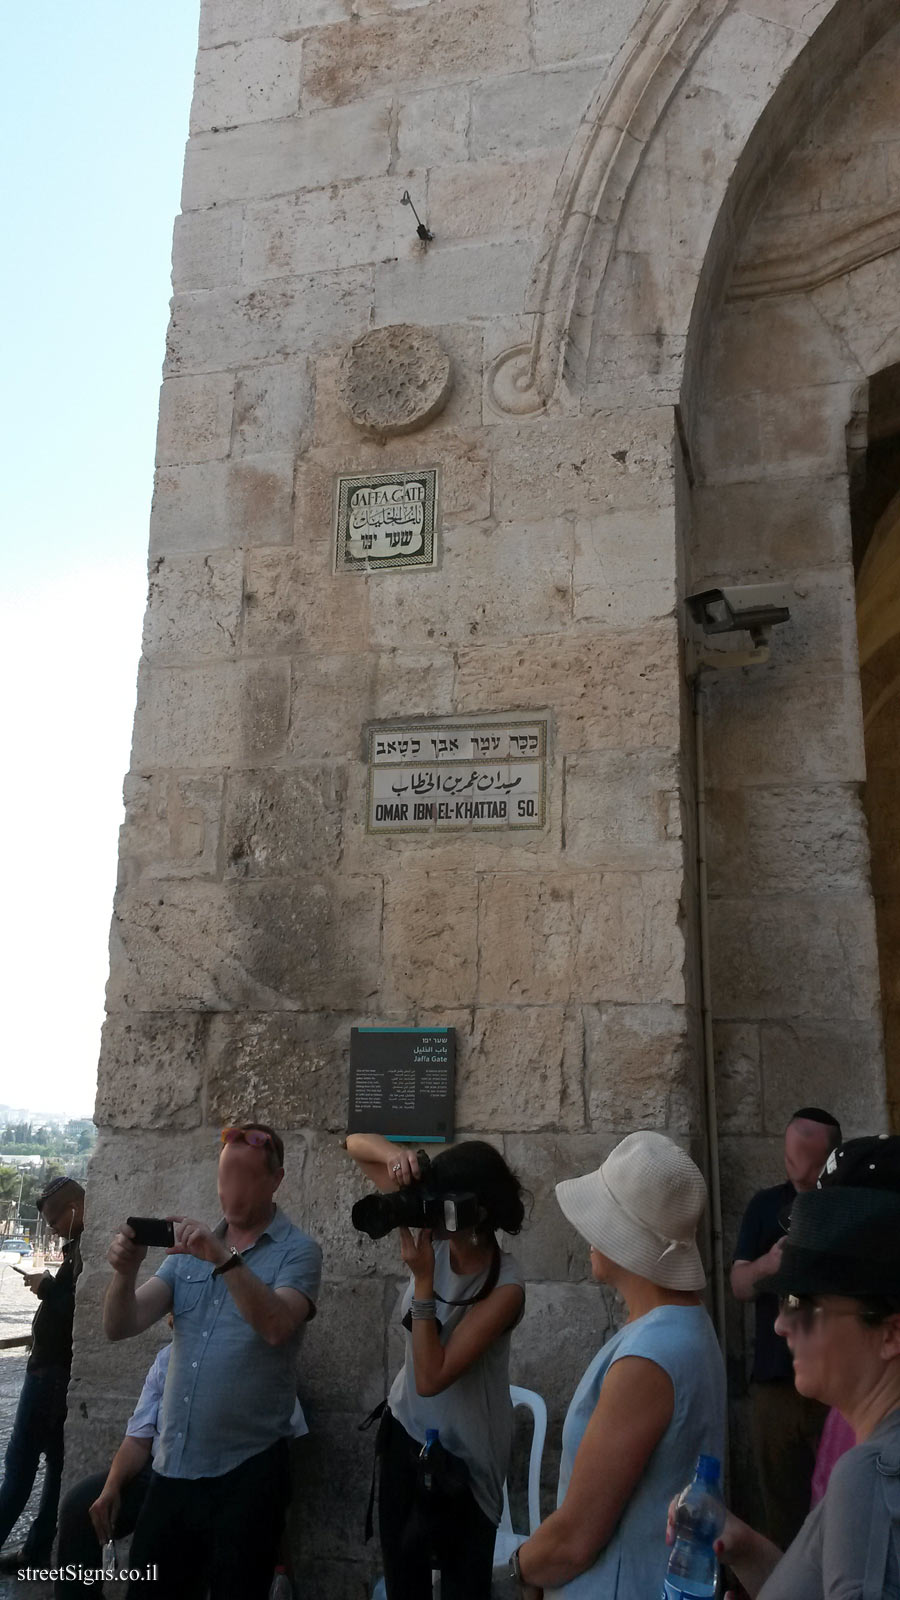 Jaffa Gate where Omar Ibn El-Khattab Square sign is located